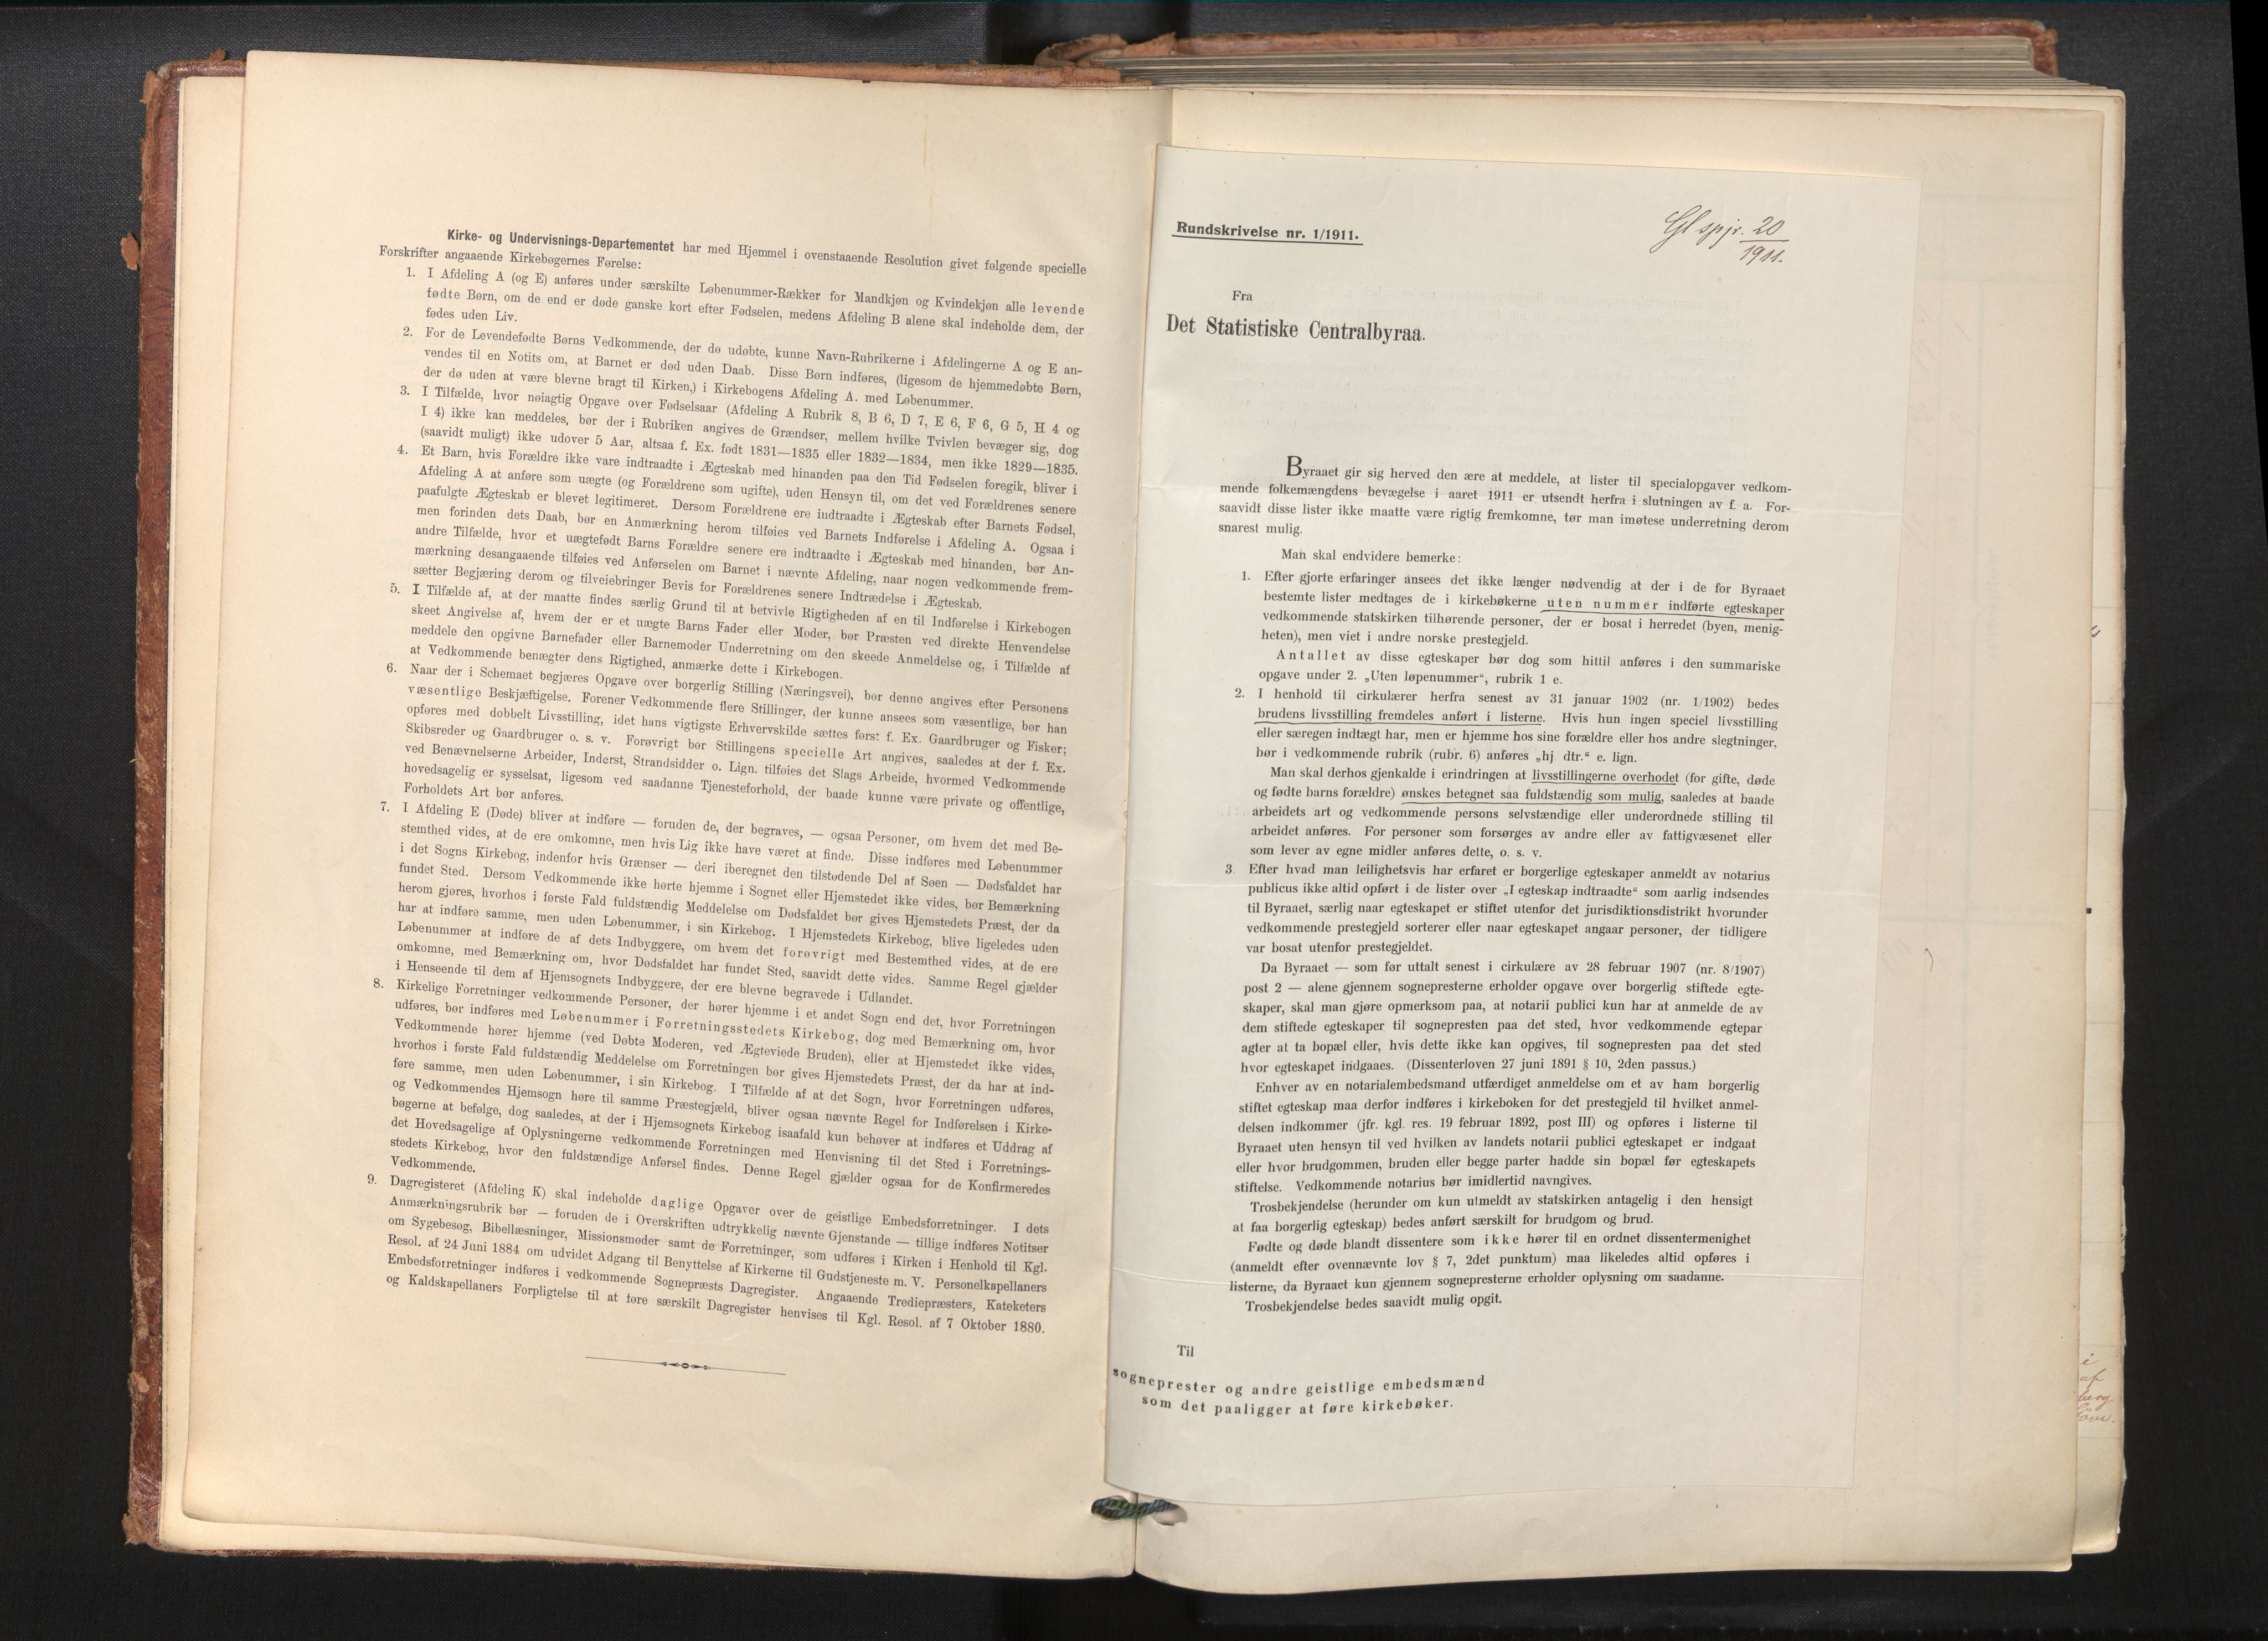 Gloppen sokneprestembete, SAB/A-80101/H/Haa/Haab/L0002: Ministerialbok nr. B 2, 1906-1932